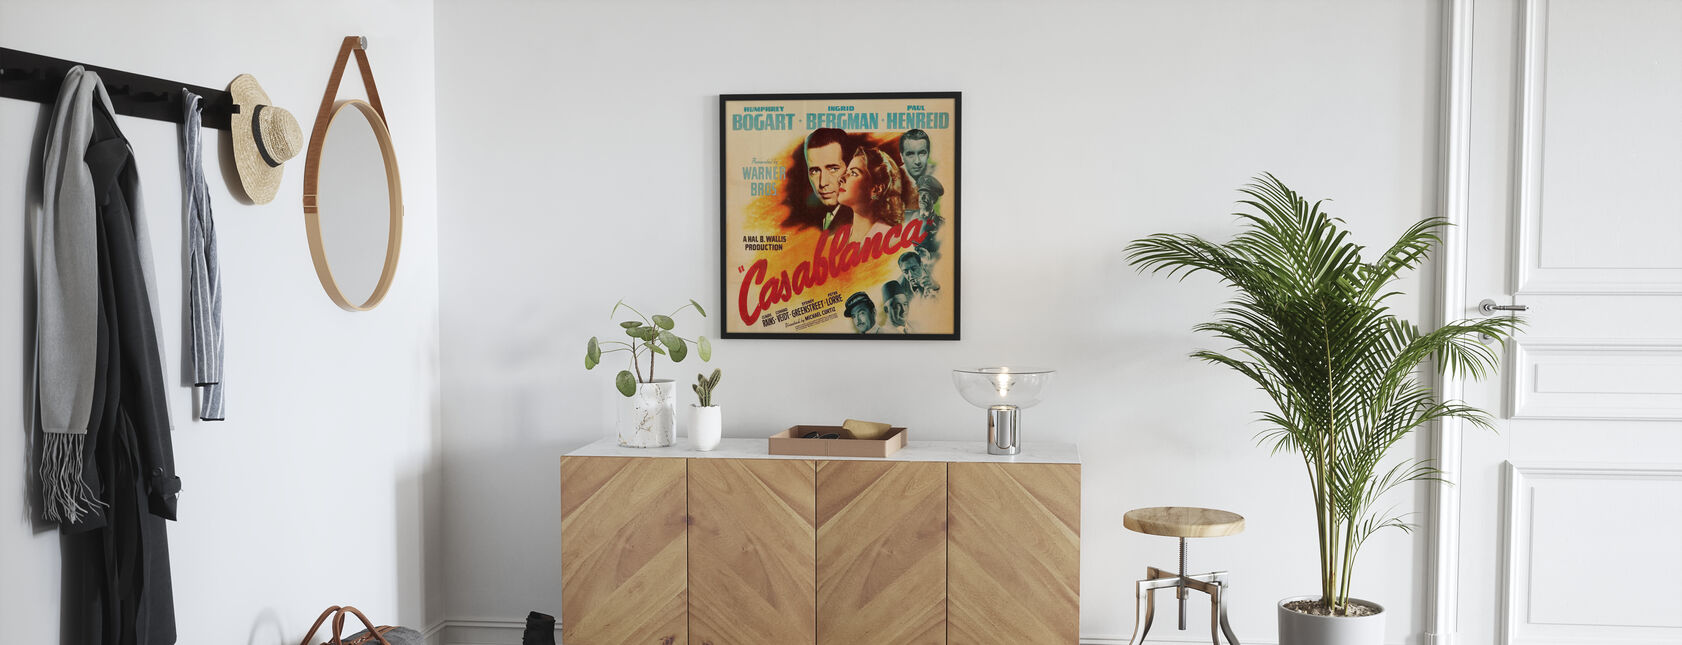 Movie Poster Casablanca - Poster - Hallway